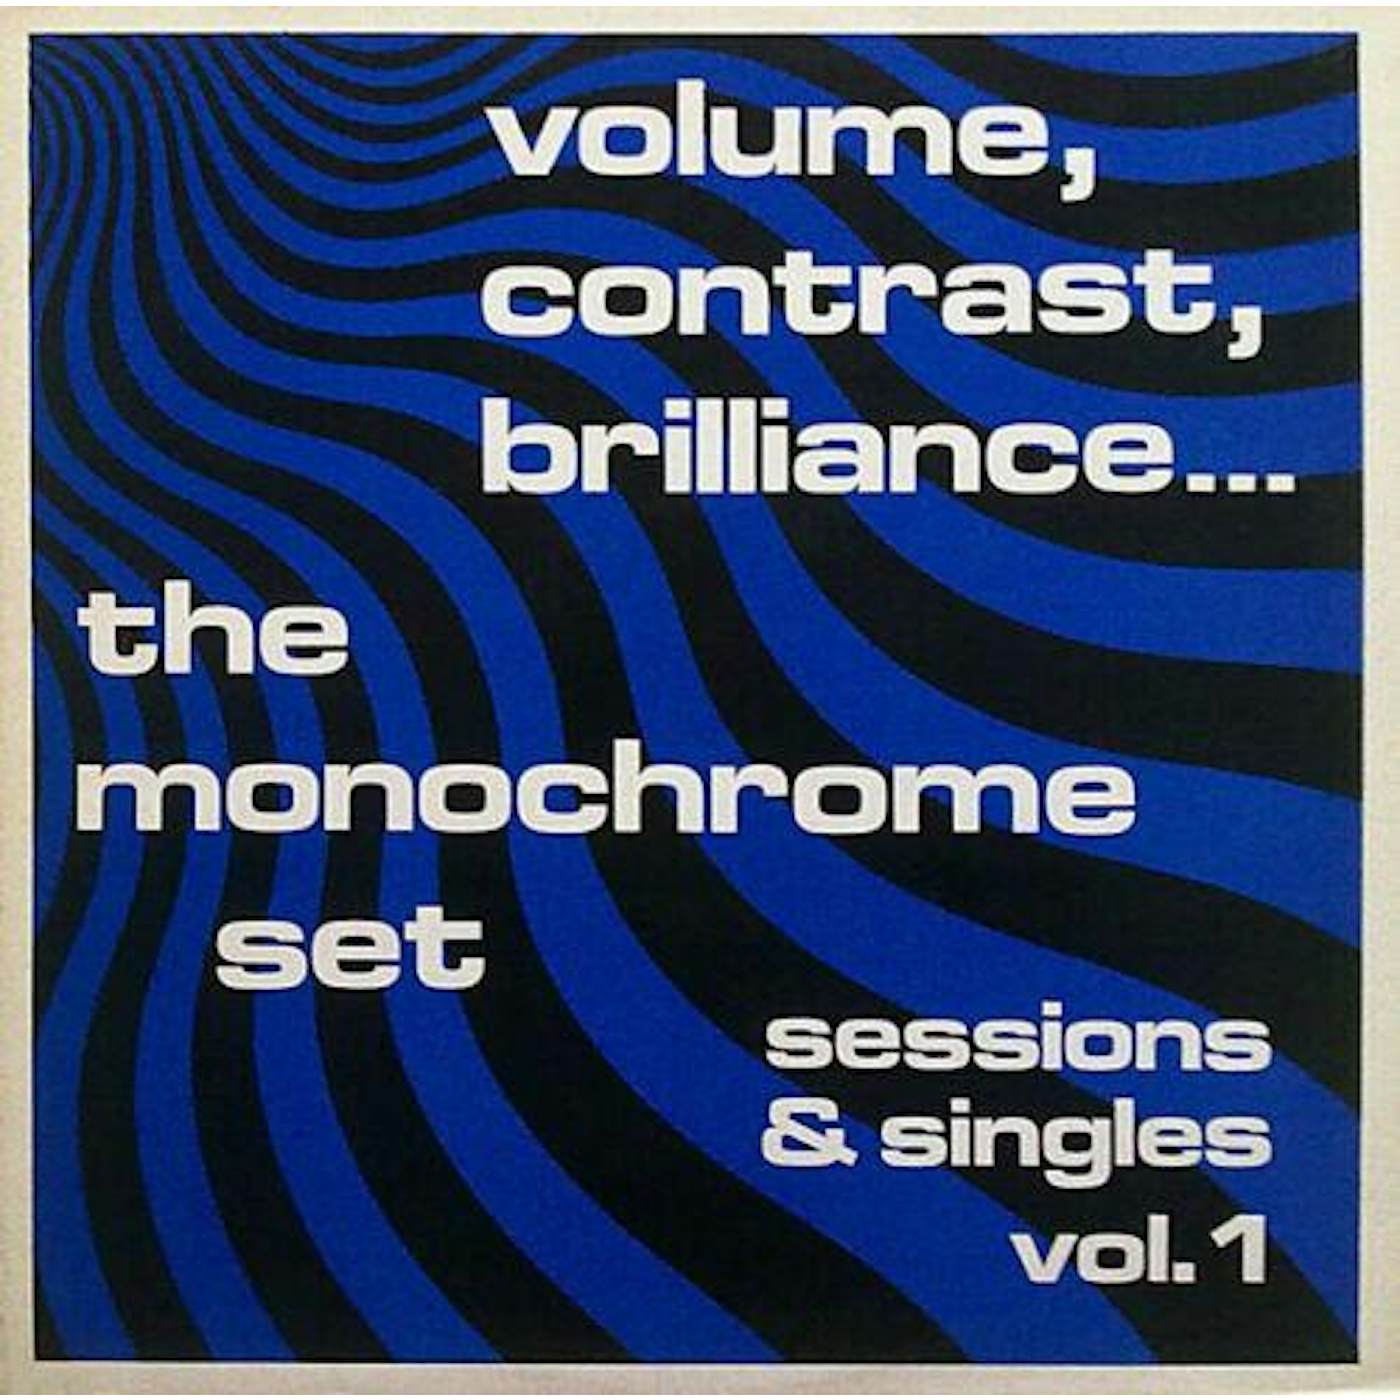 The Monochrome Set VOLUME, CONTRAST, BRILLIANCE... SESSIONS & SINGLES VOL. 1 Vinyl Record